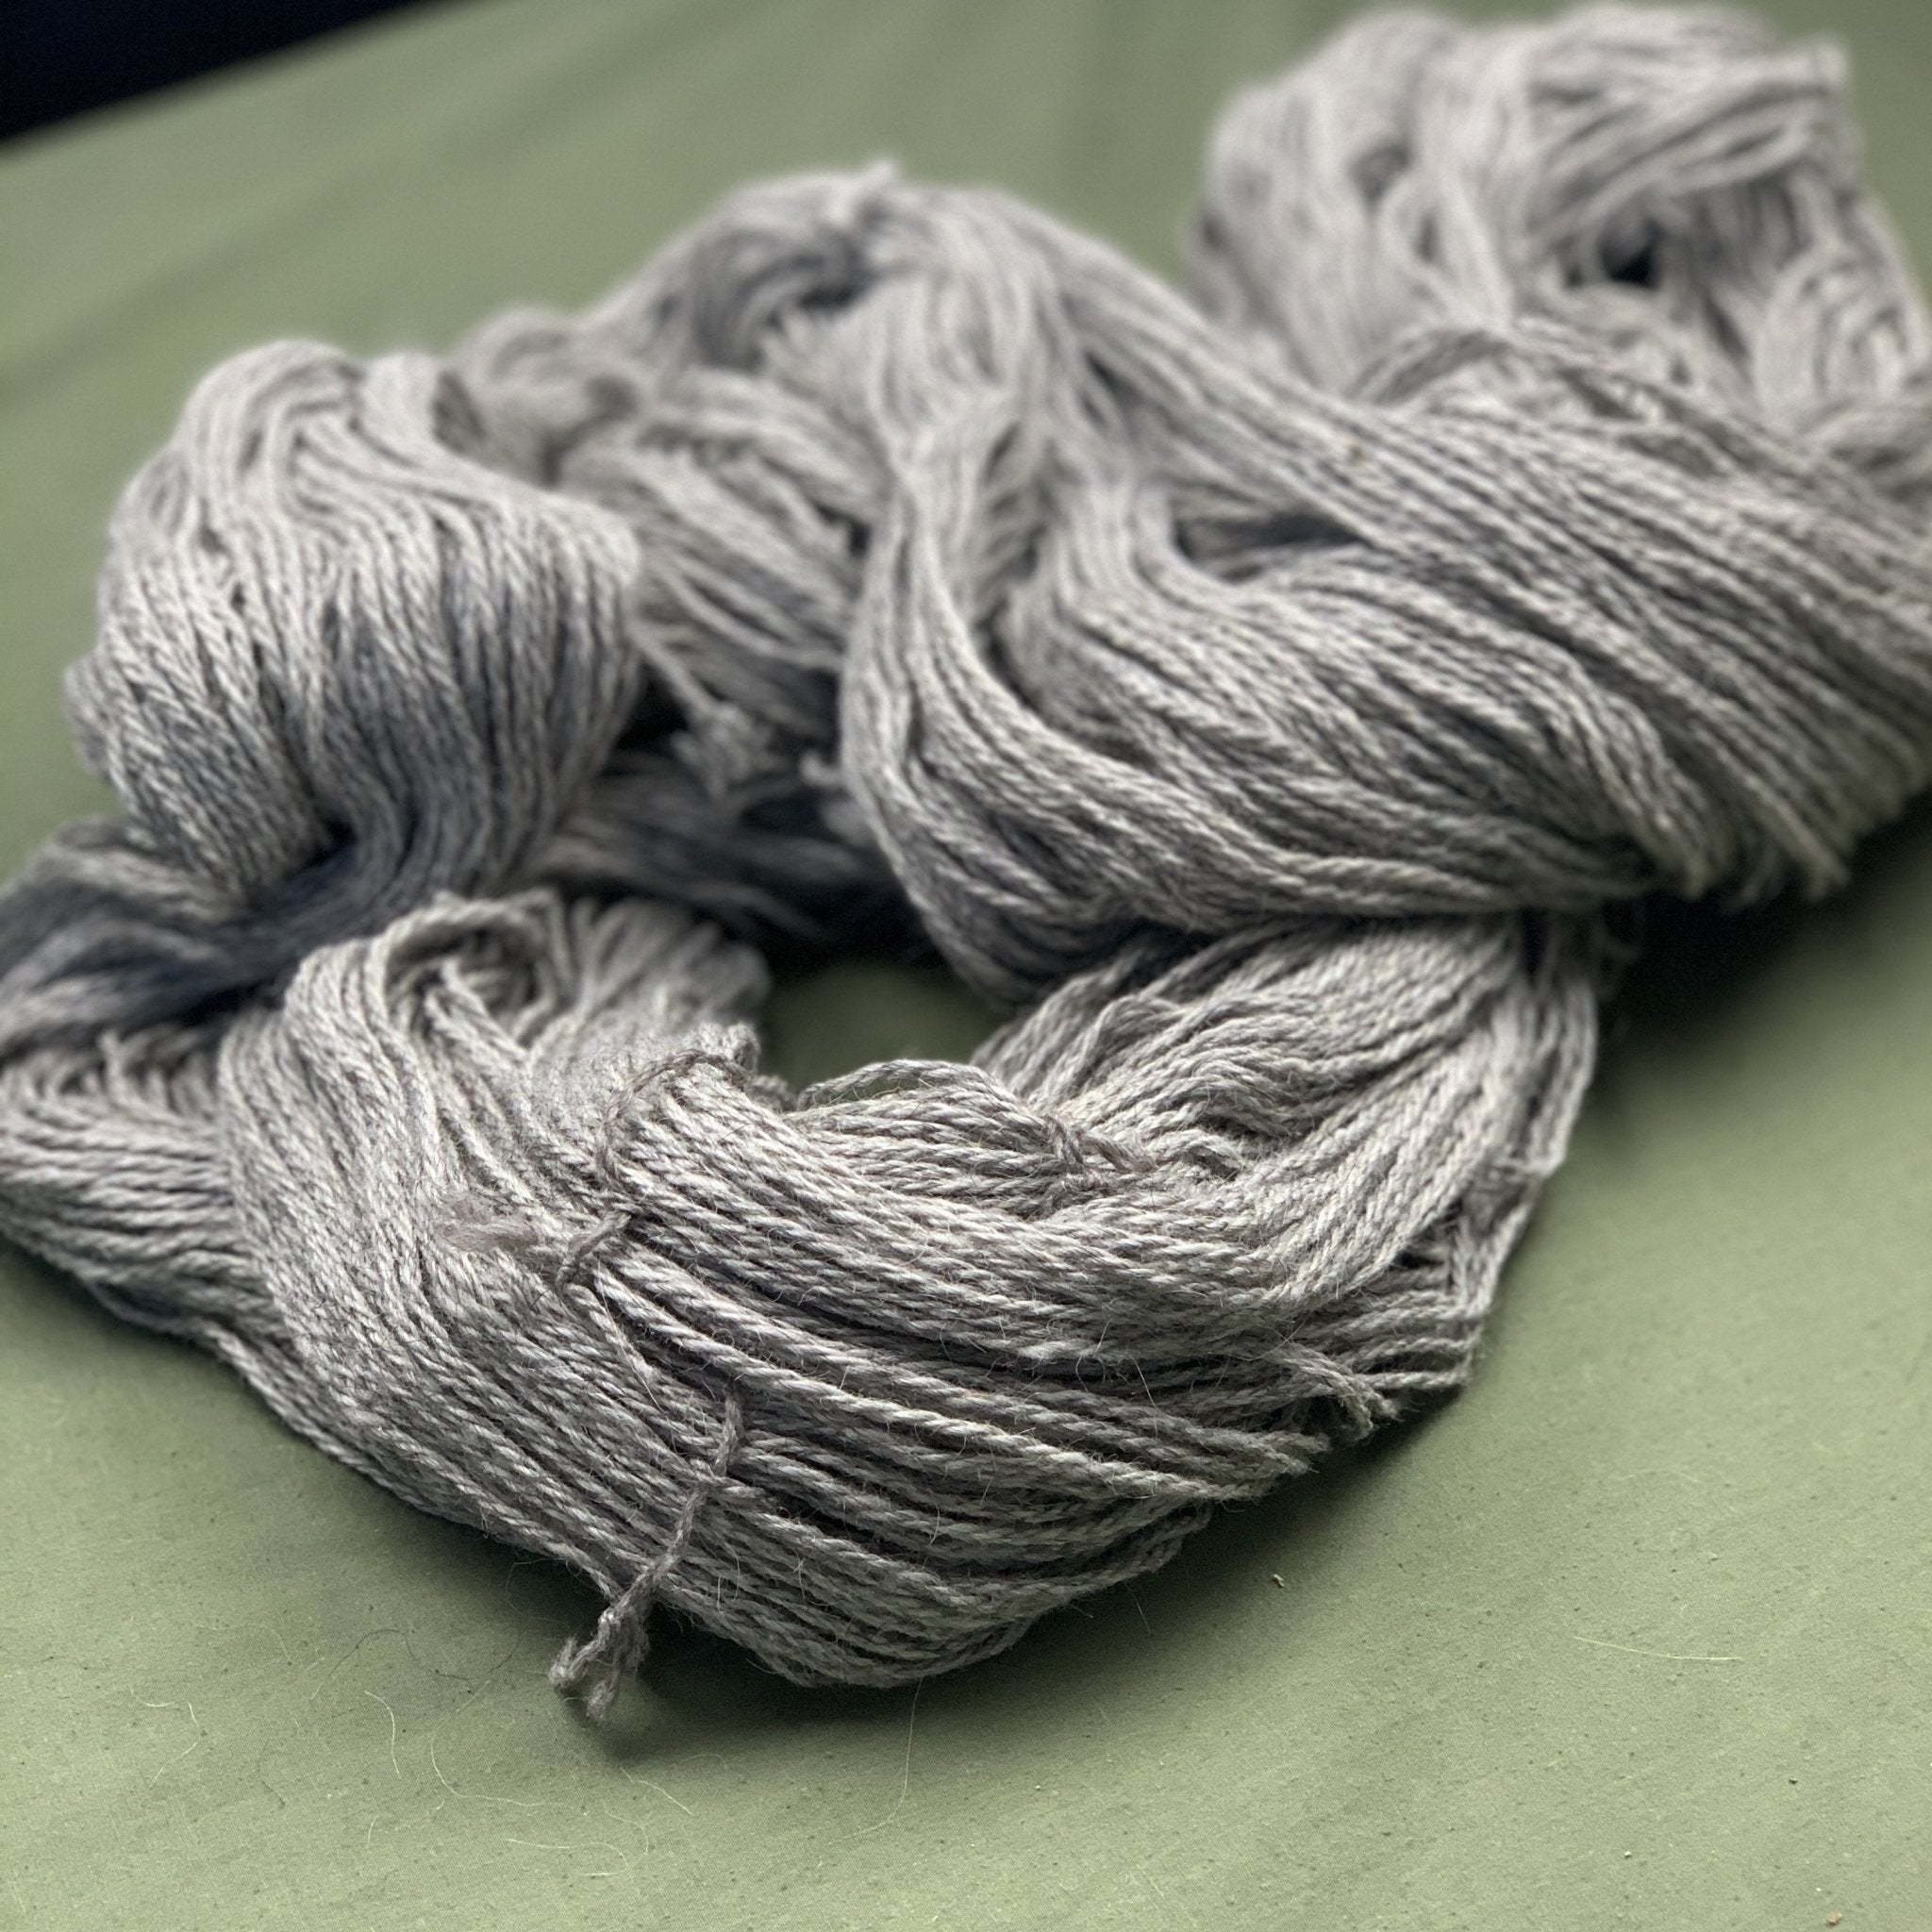 SIX Skeins Icelandic Wool Yarn Bulky Weight - Warp or Outerwear